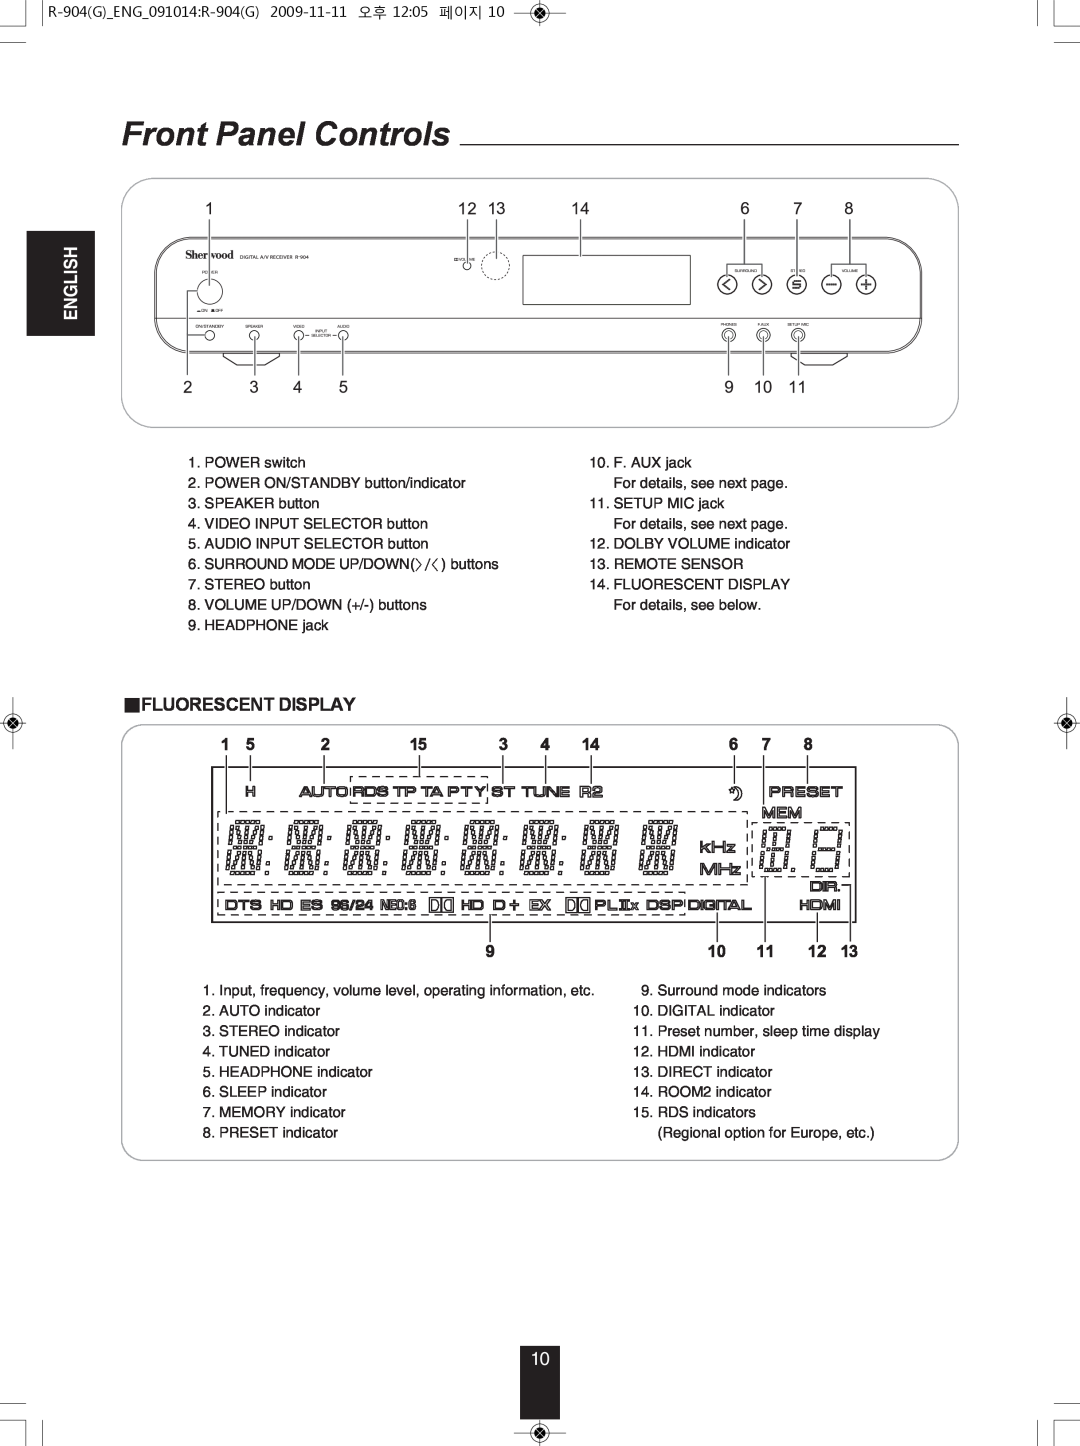 Sherwood R-904 manual Front Panel Controls, Fluorescent Display, English 